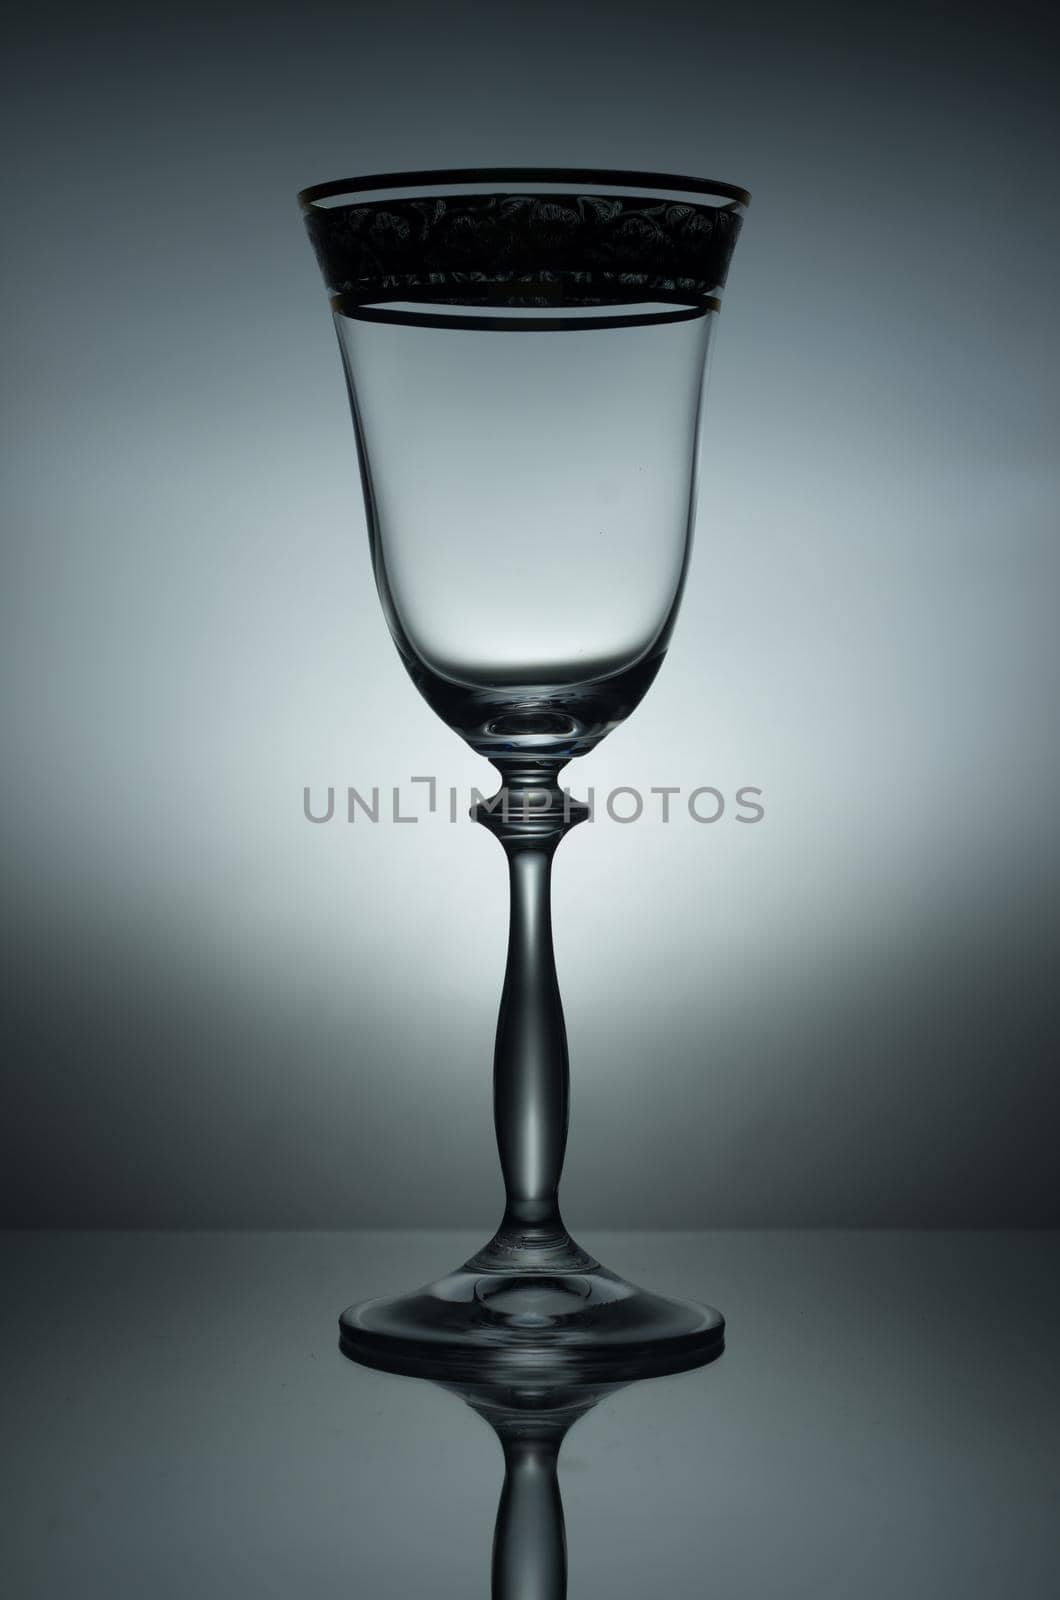 empty wine glass on a mirror background